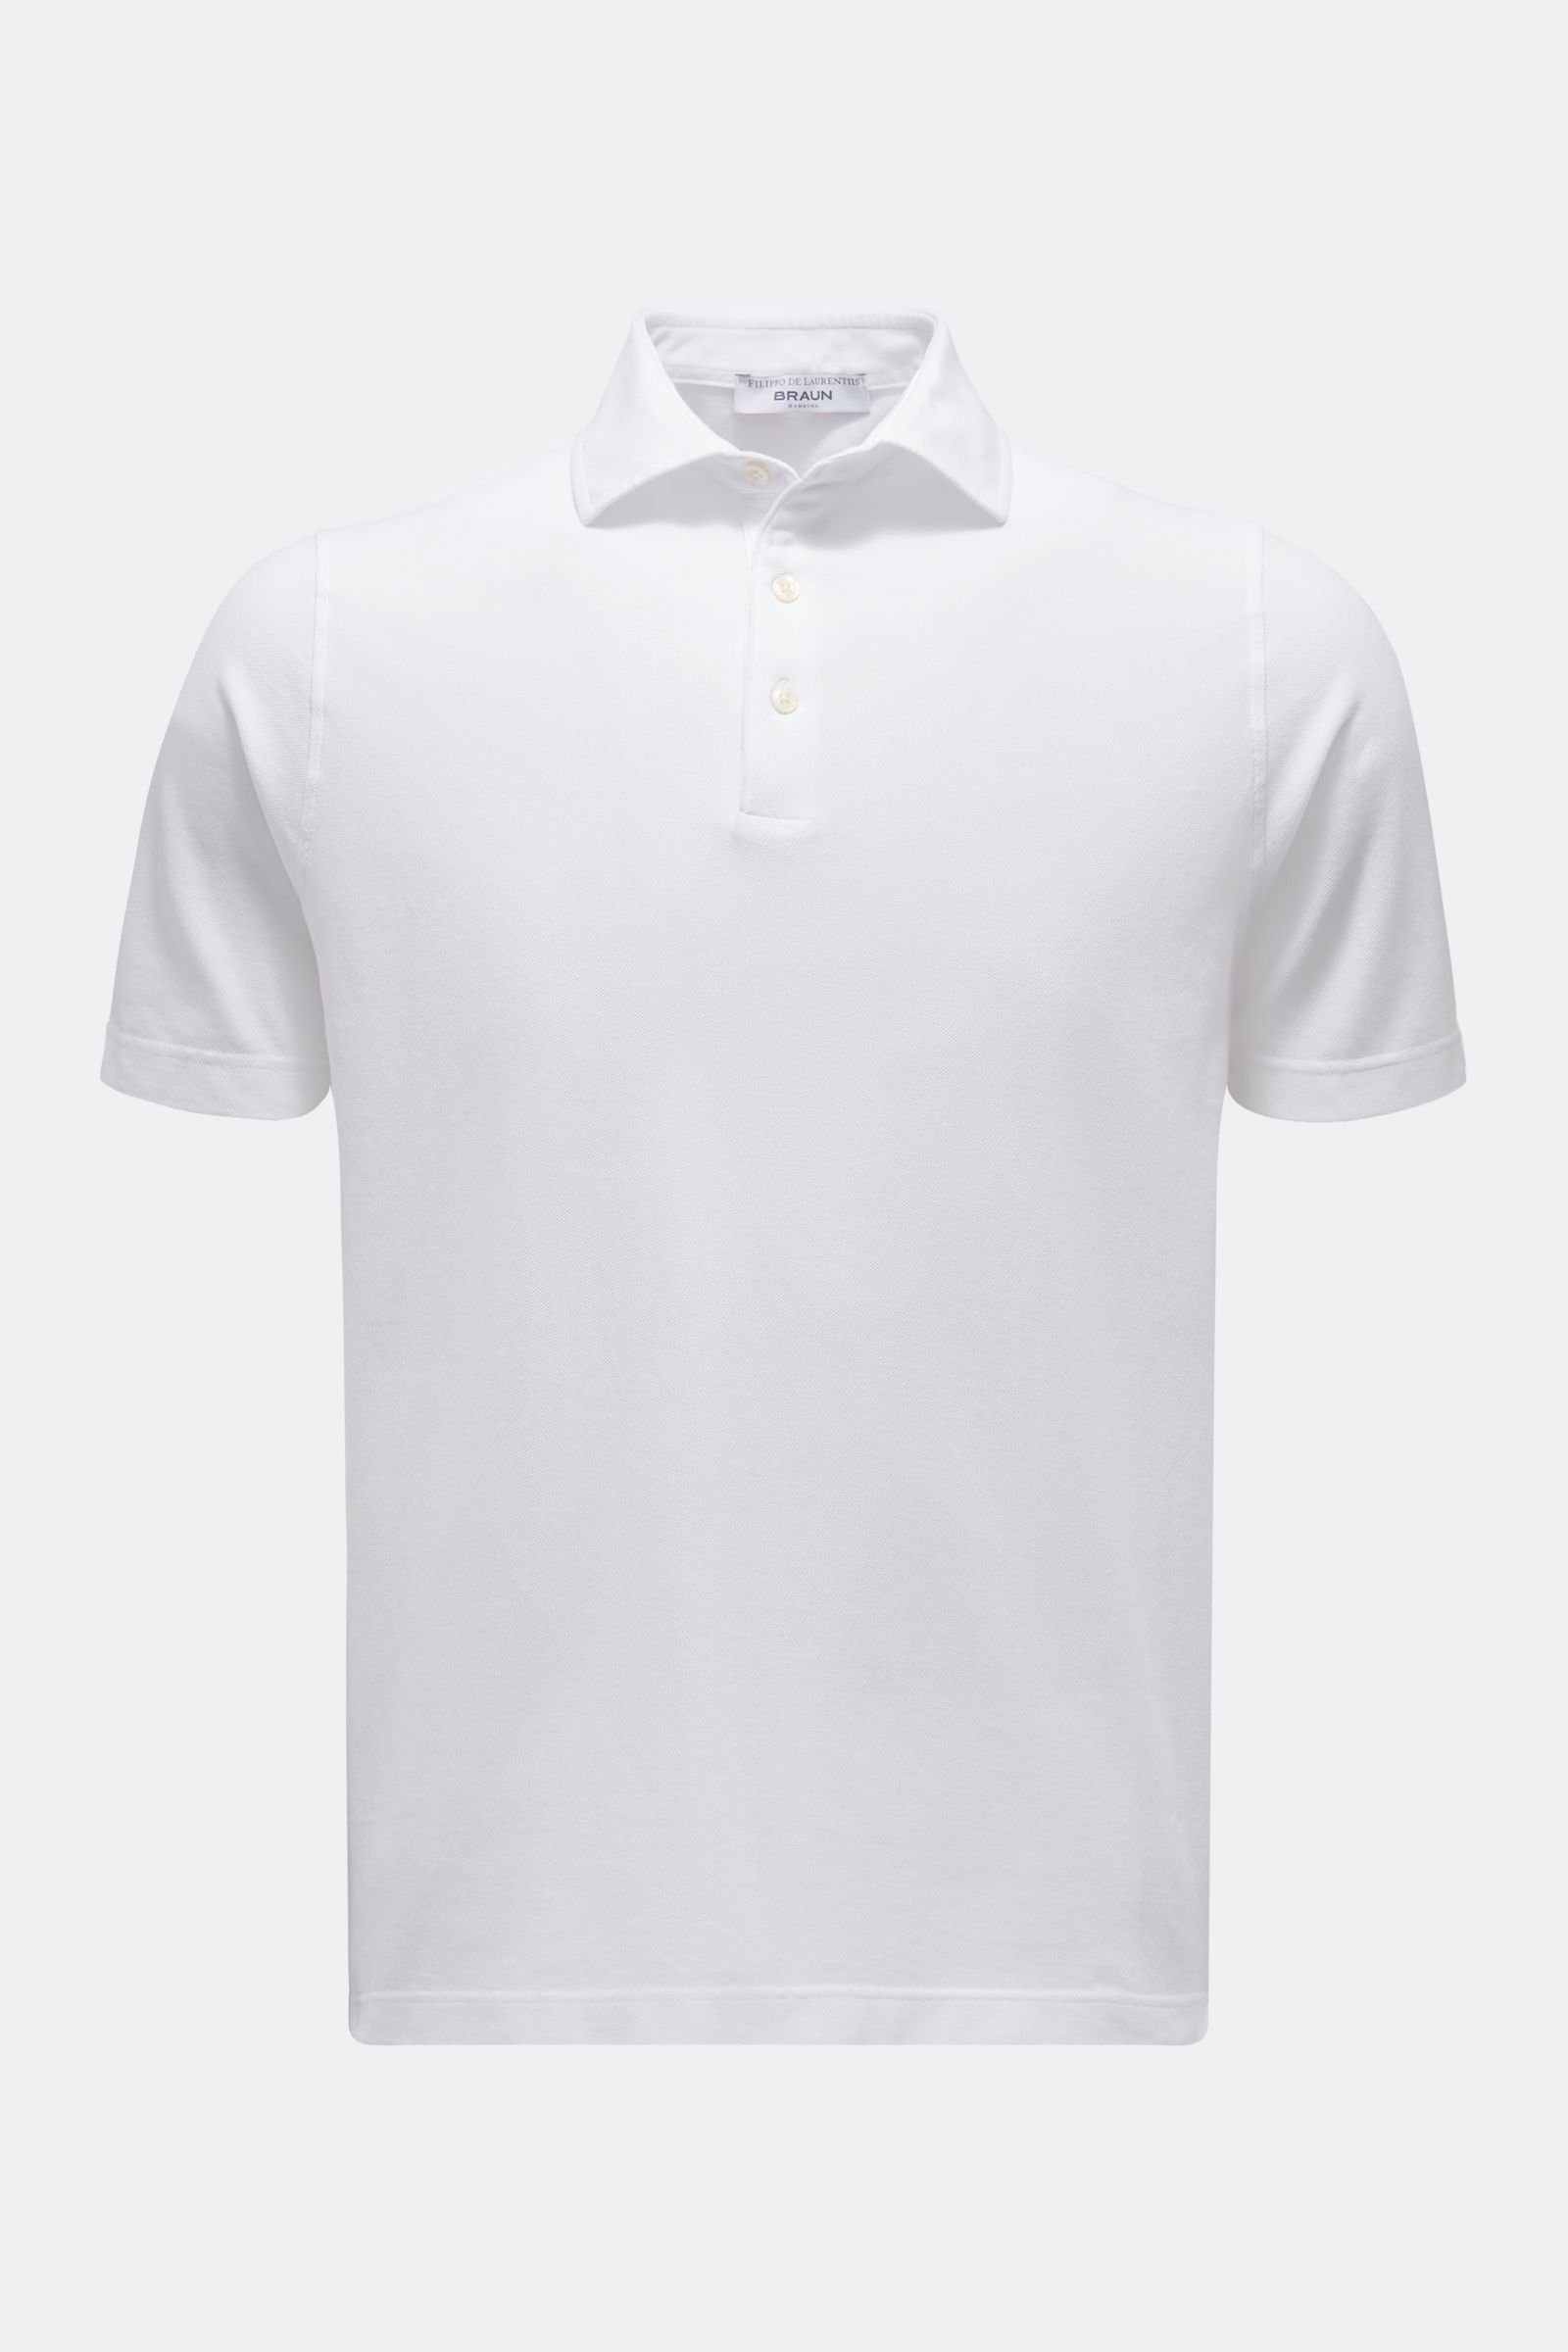 Polo shirt white